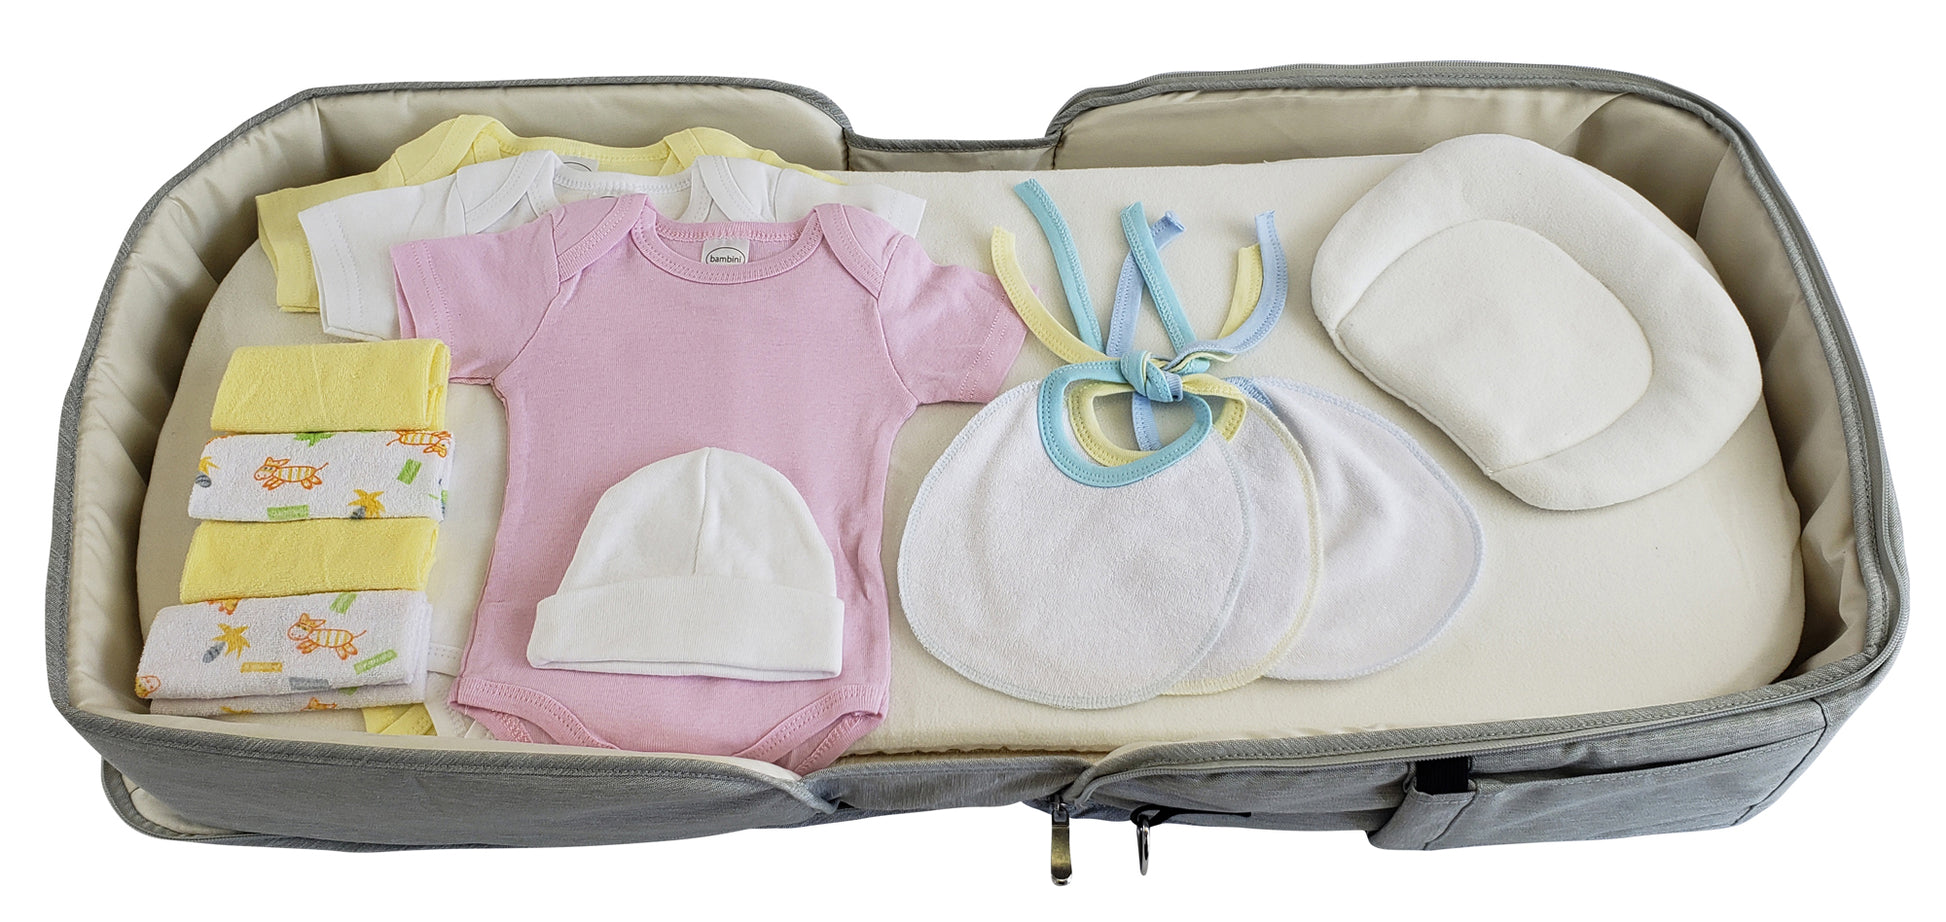 Girls 12 pc Baby Clothing Starter Set with Diaper Bag 808-12-Set